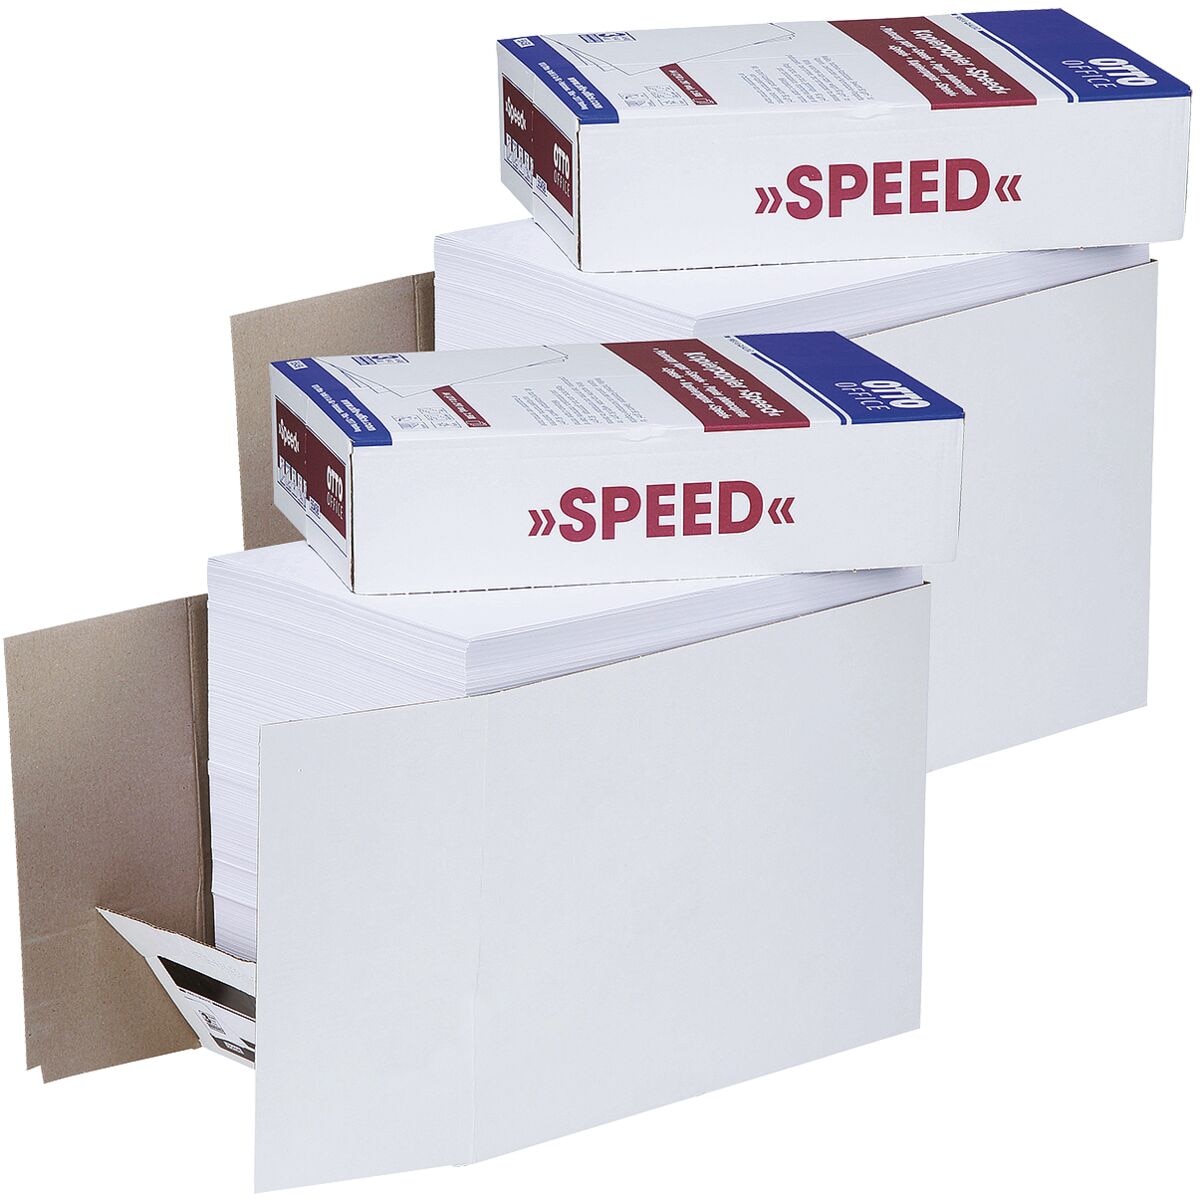 2x Öko-Box Kopierpapier OTTO Office SPEED - 5000 Blatt gesamt, 80g/qm